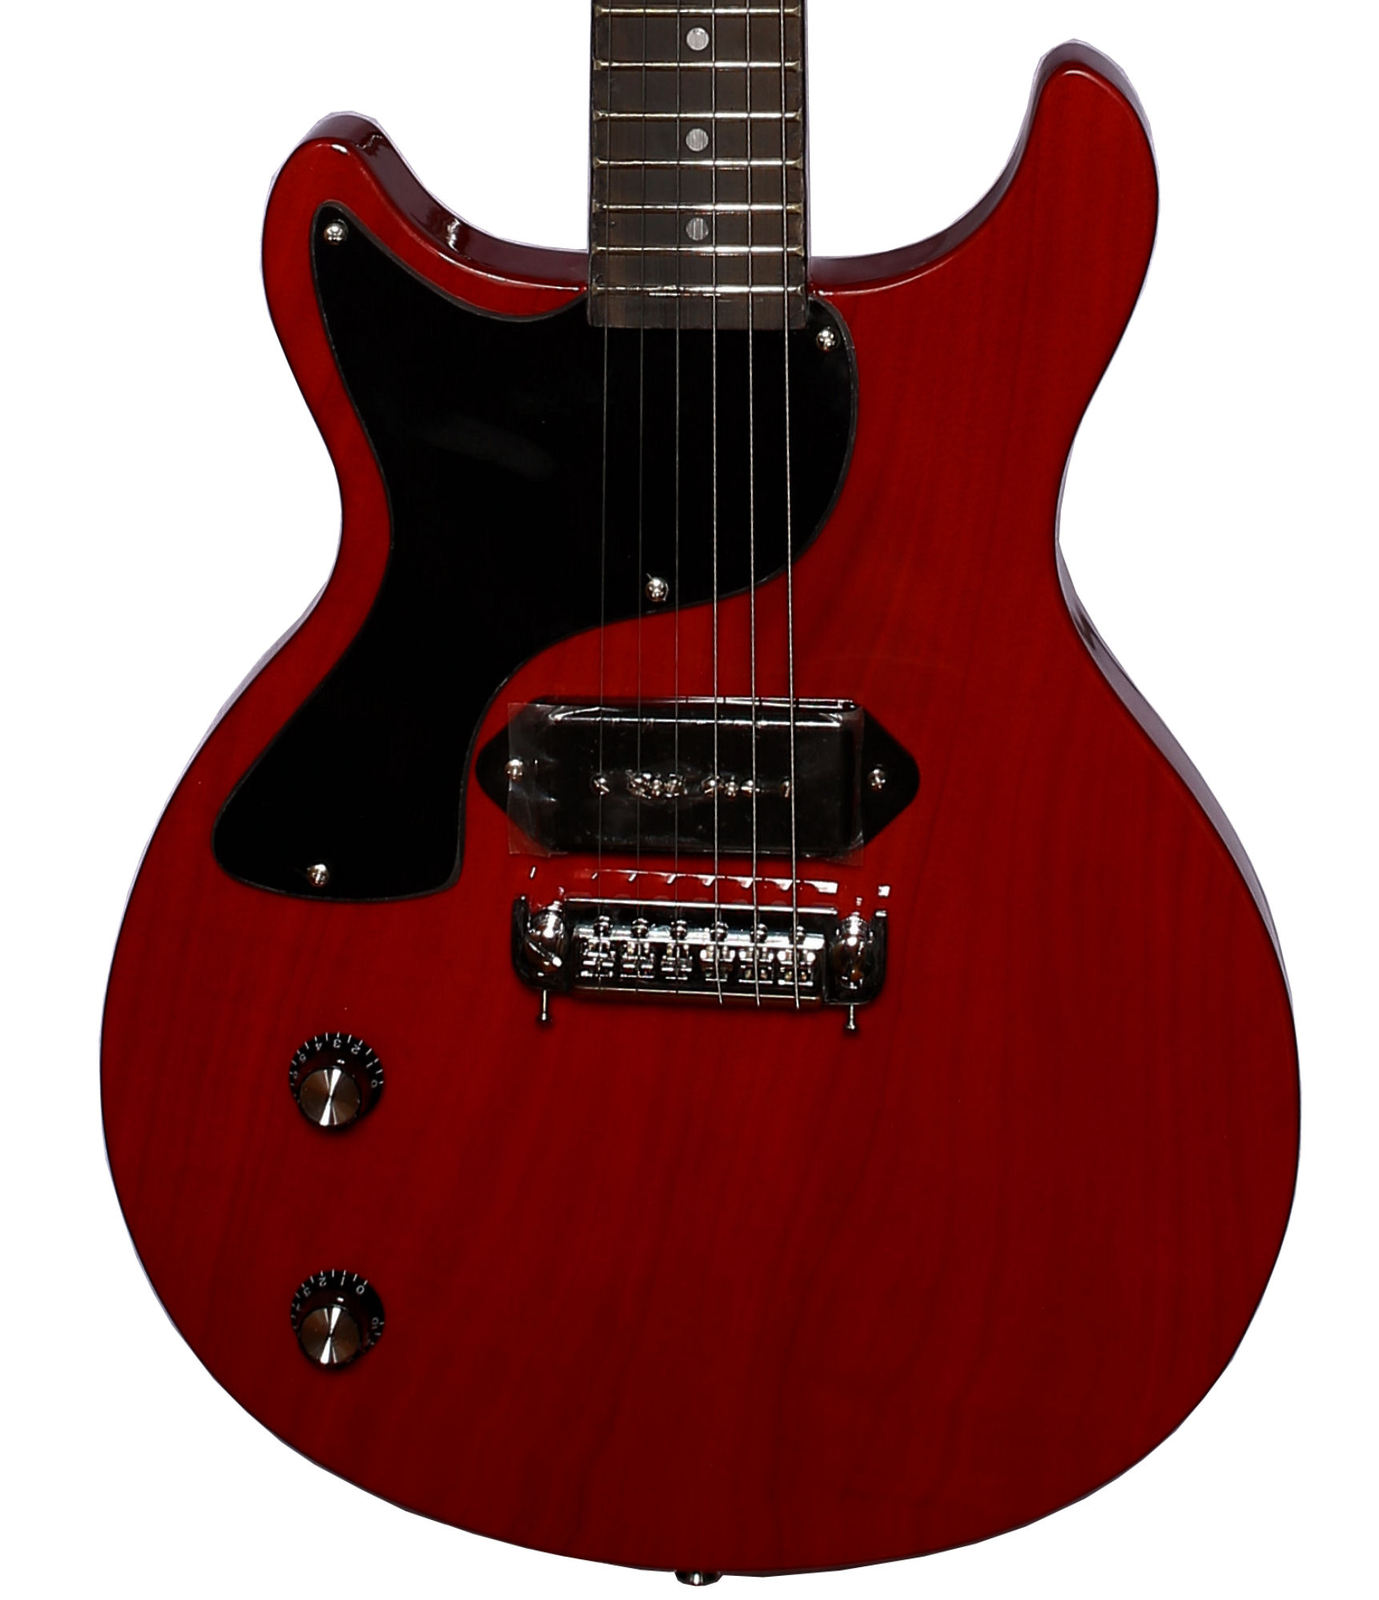 Tokai Love Rock Jr LP 56 Cherry Red LEFT HAND Electric Guitar New - $325.00